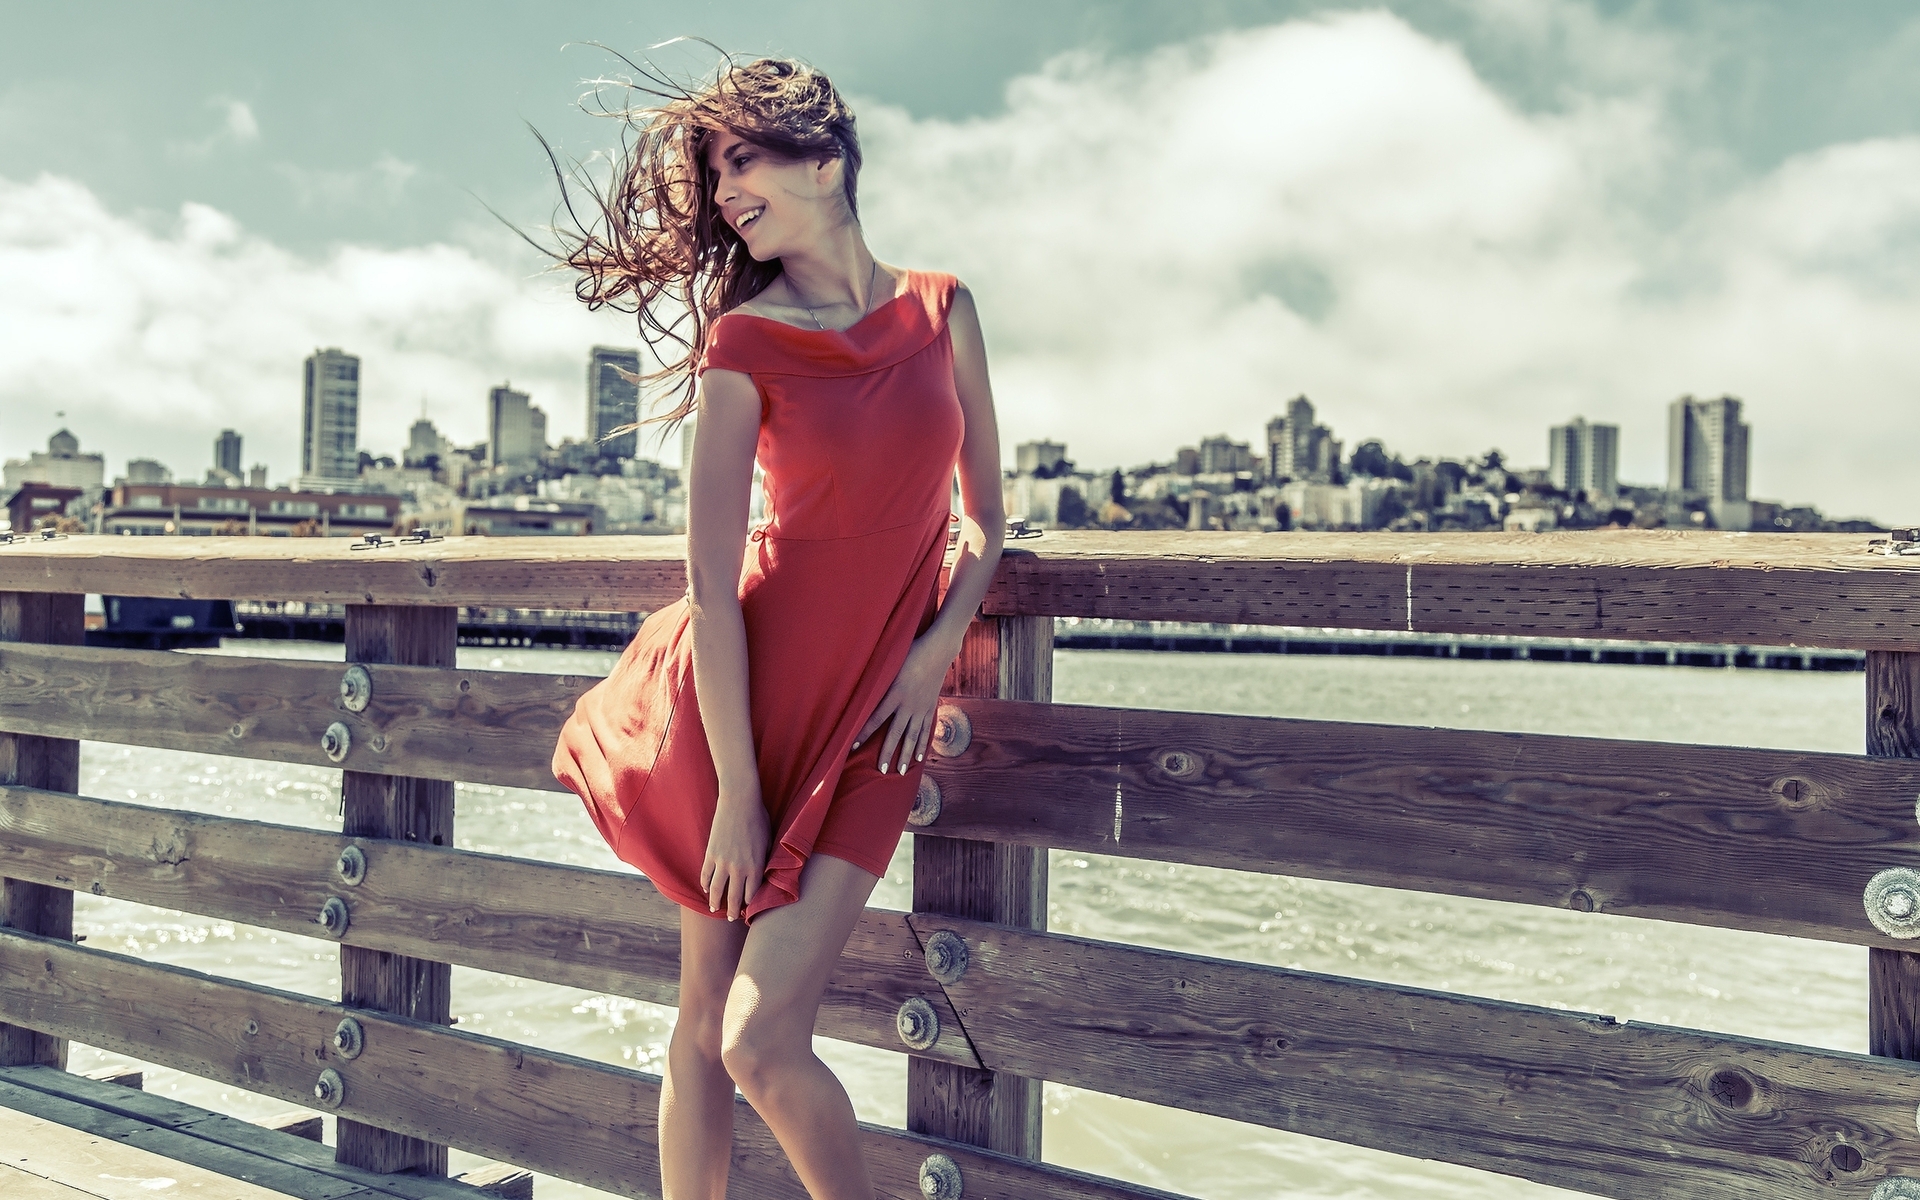 Image: Girl, dress, red, hair, wind, develops, embankment, fence, city, sky